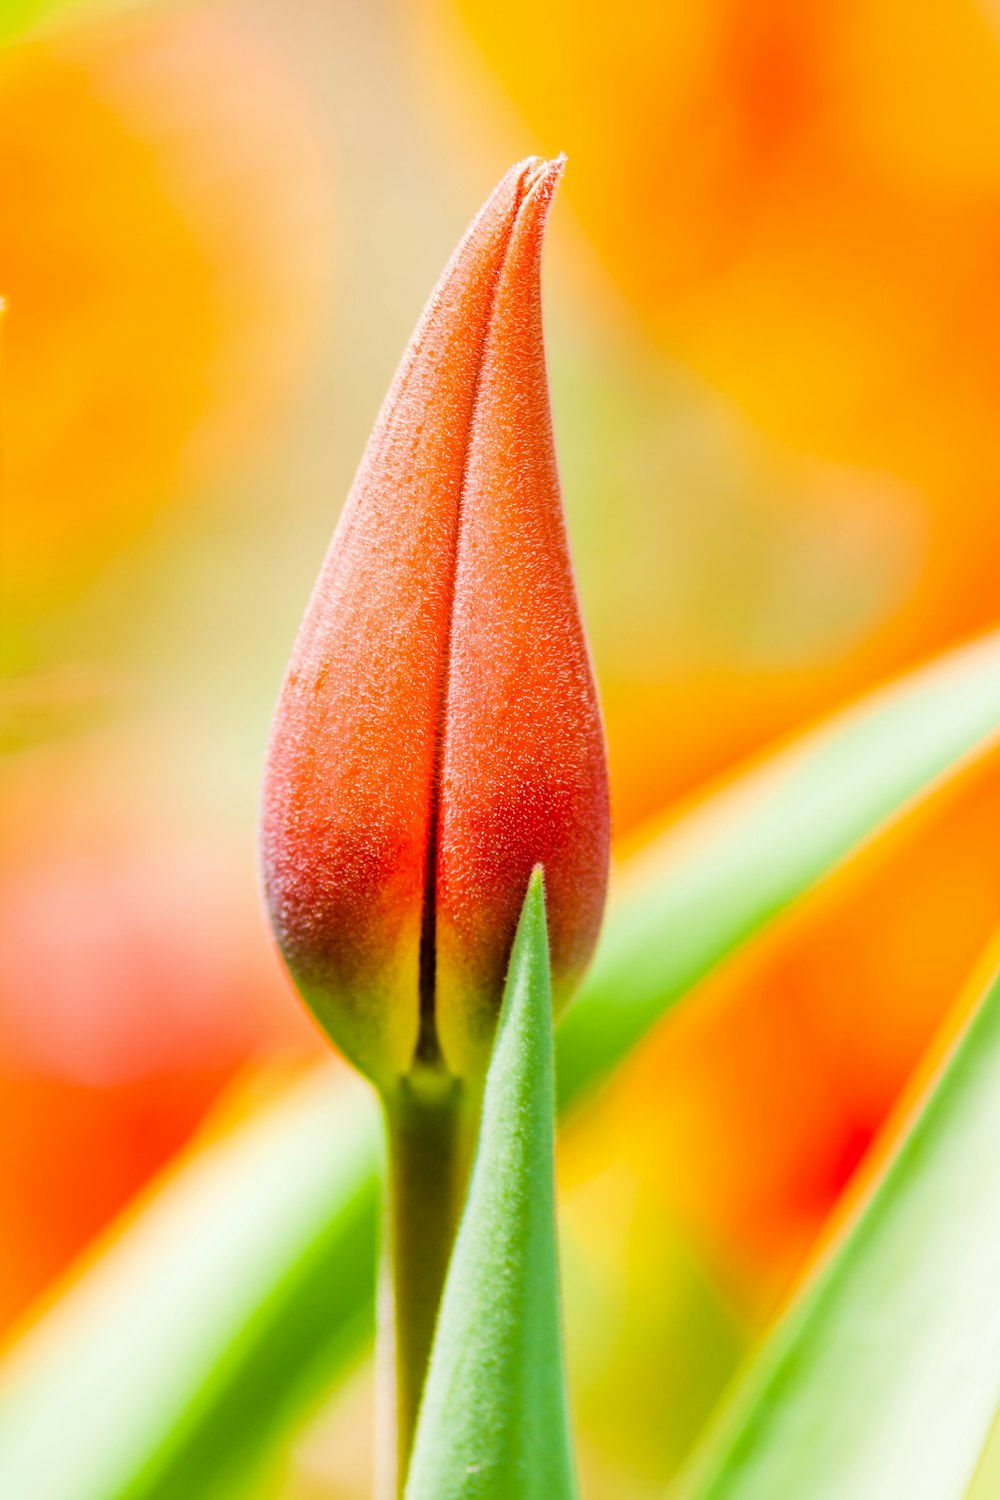 orange tulip bud photo – Free Flower Image on Unsplash